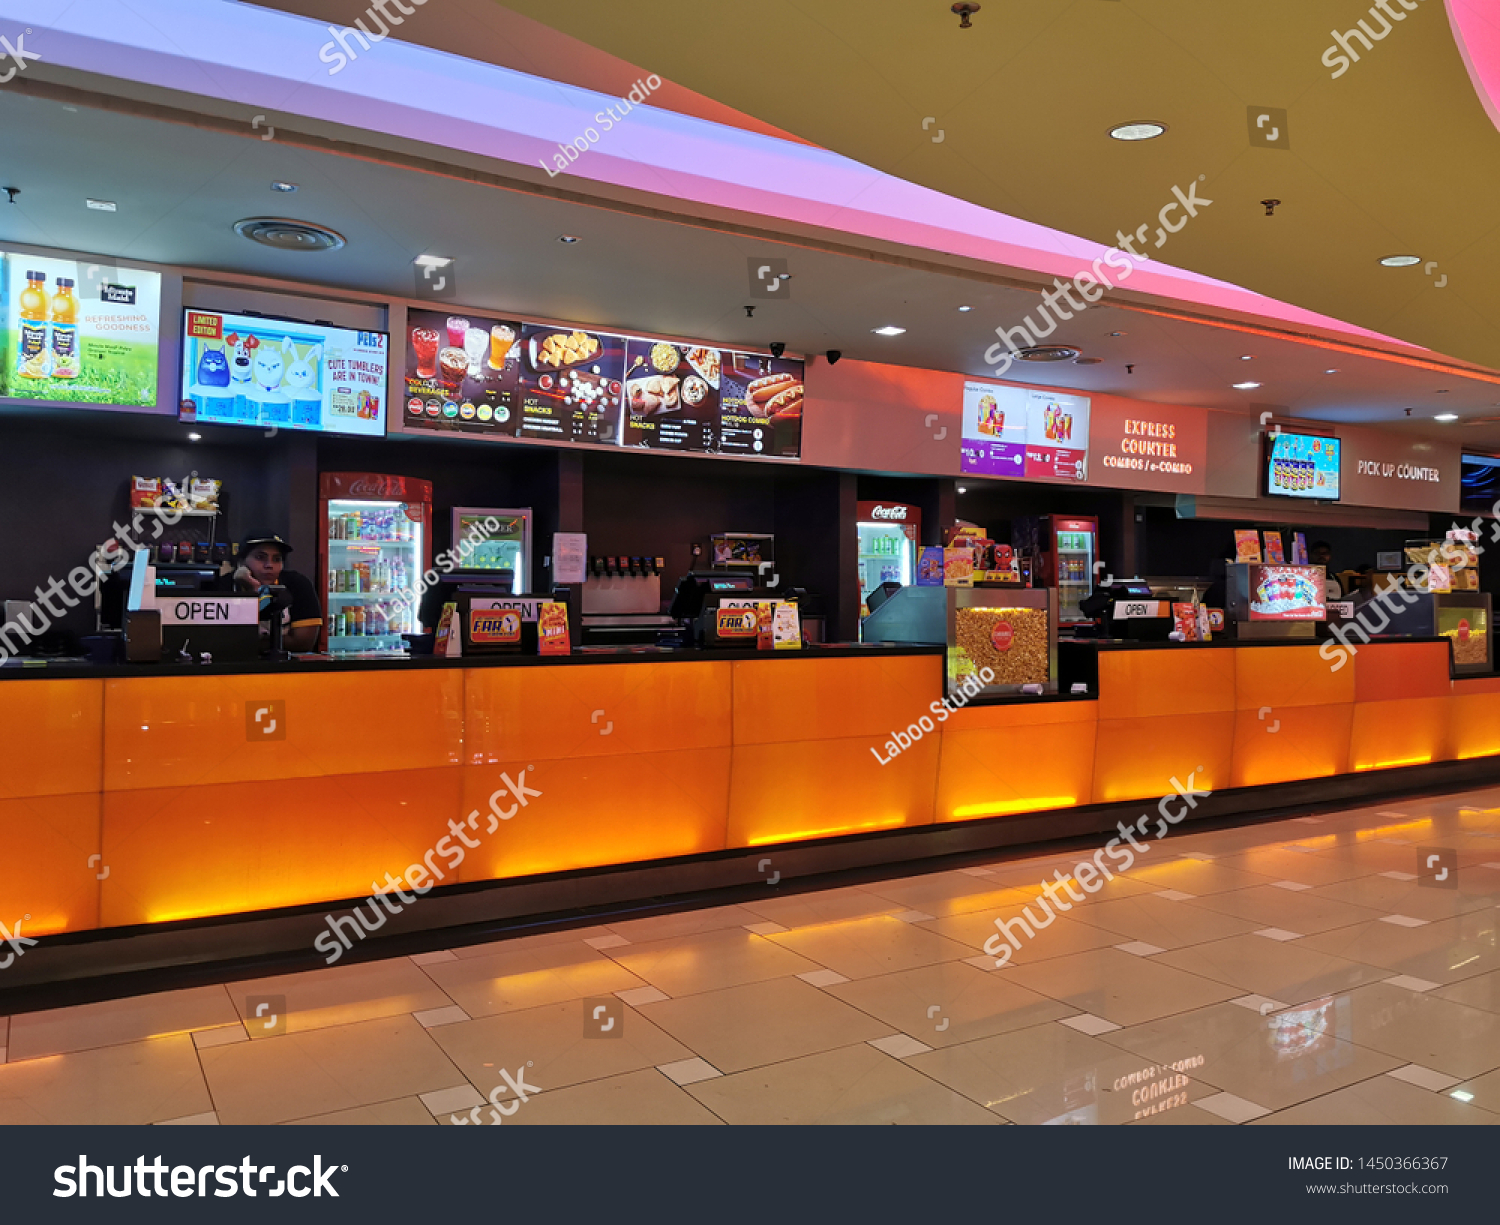 Pall mall cinema